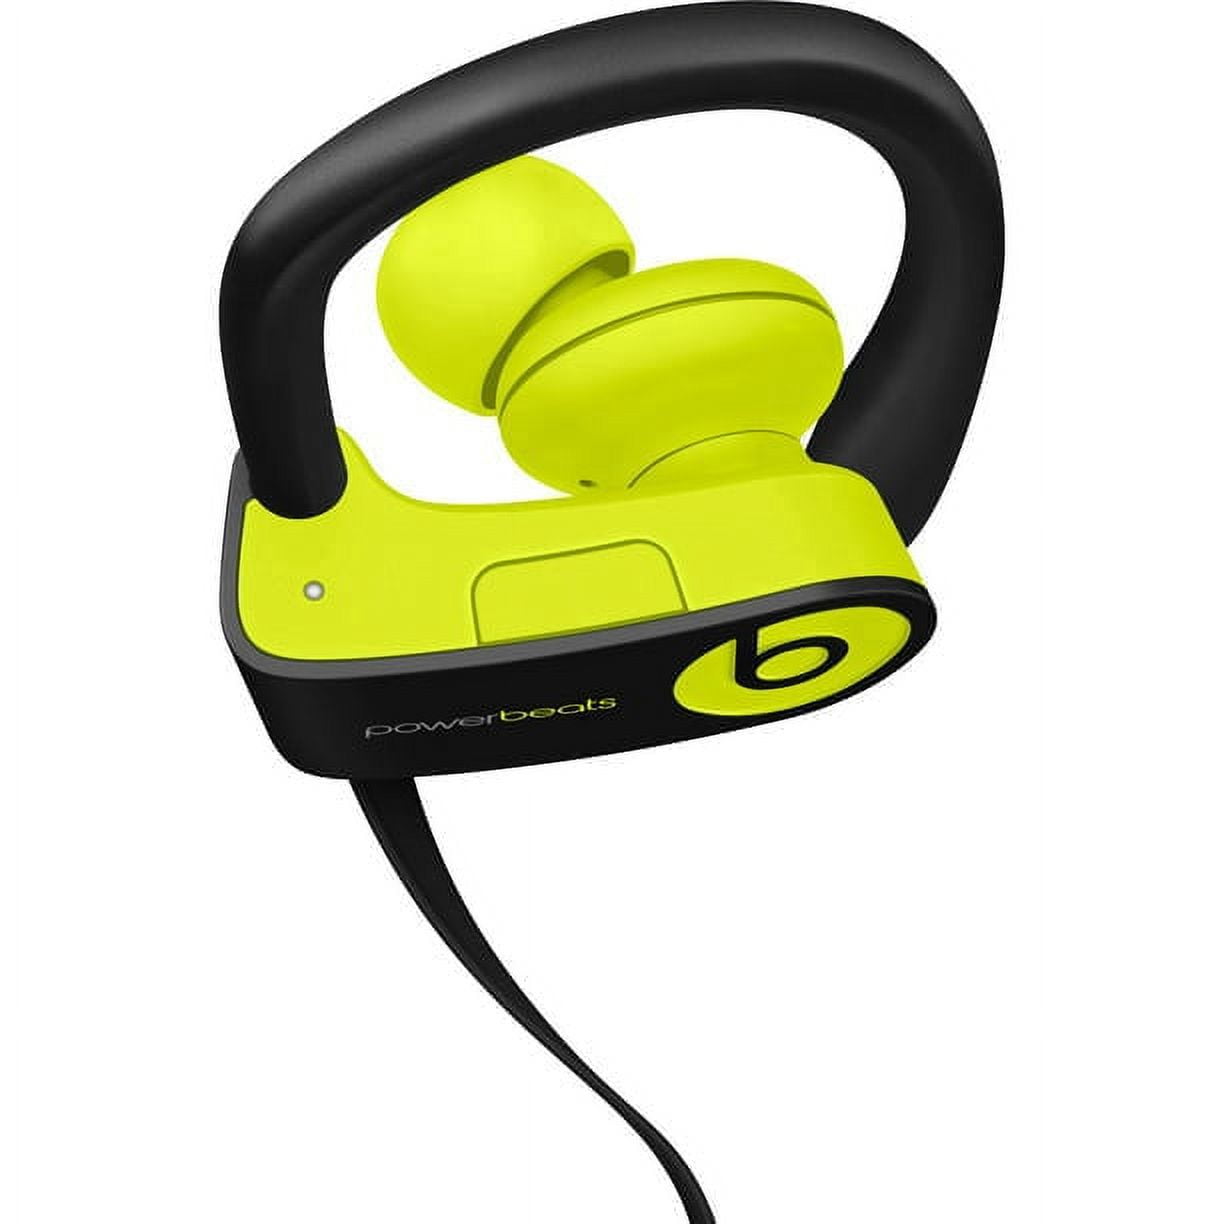 Used Apple Beats Powerbeats3 Wireless Shock Yellow In Ear Headphones MNN02LL/A - image 1 of 6